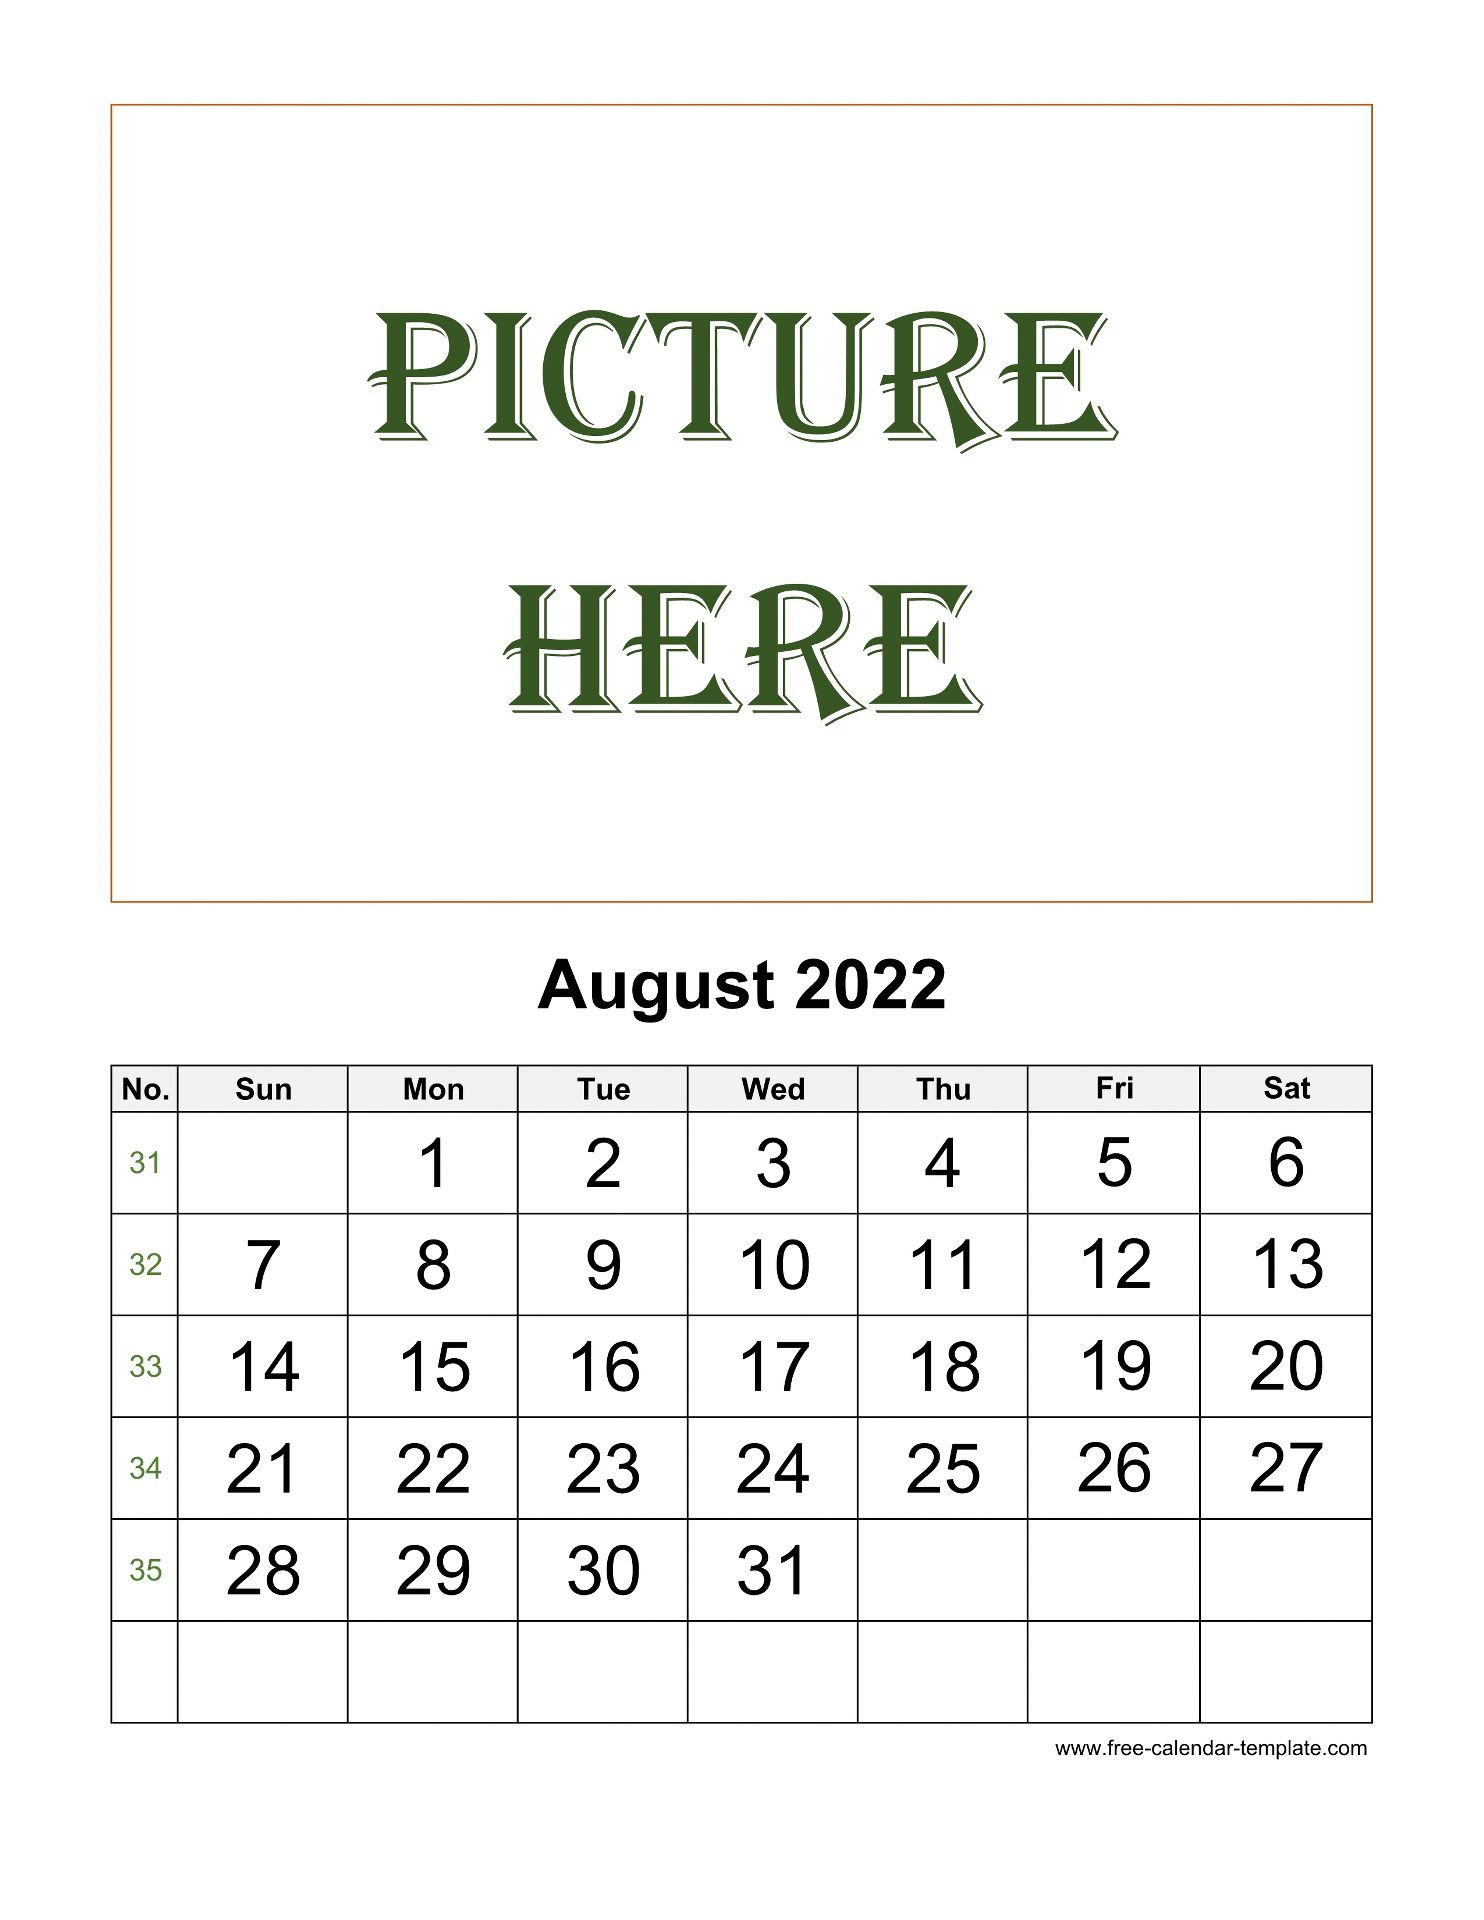 August 2022 Free Calendar Tempplate | Free-Calendar  2022 Calendar Printable August